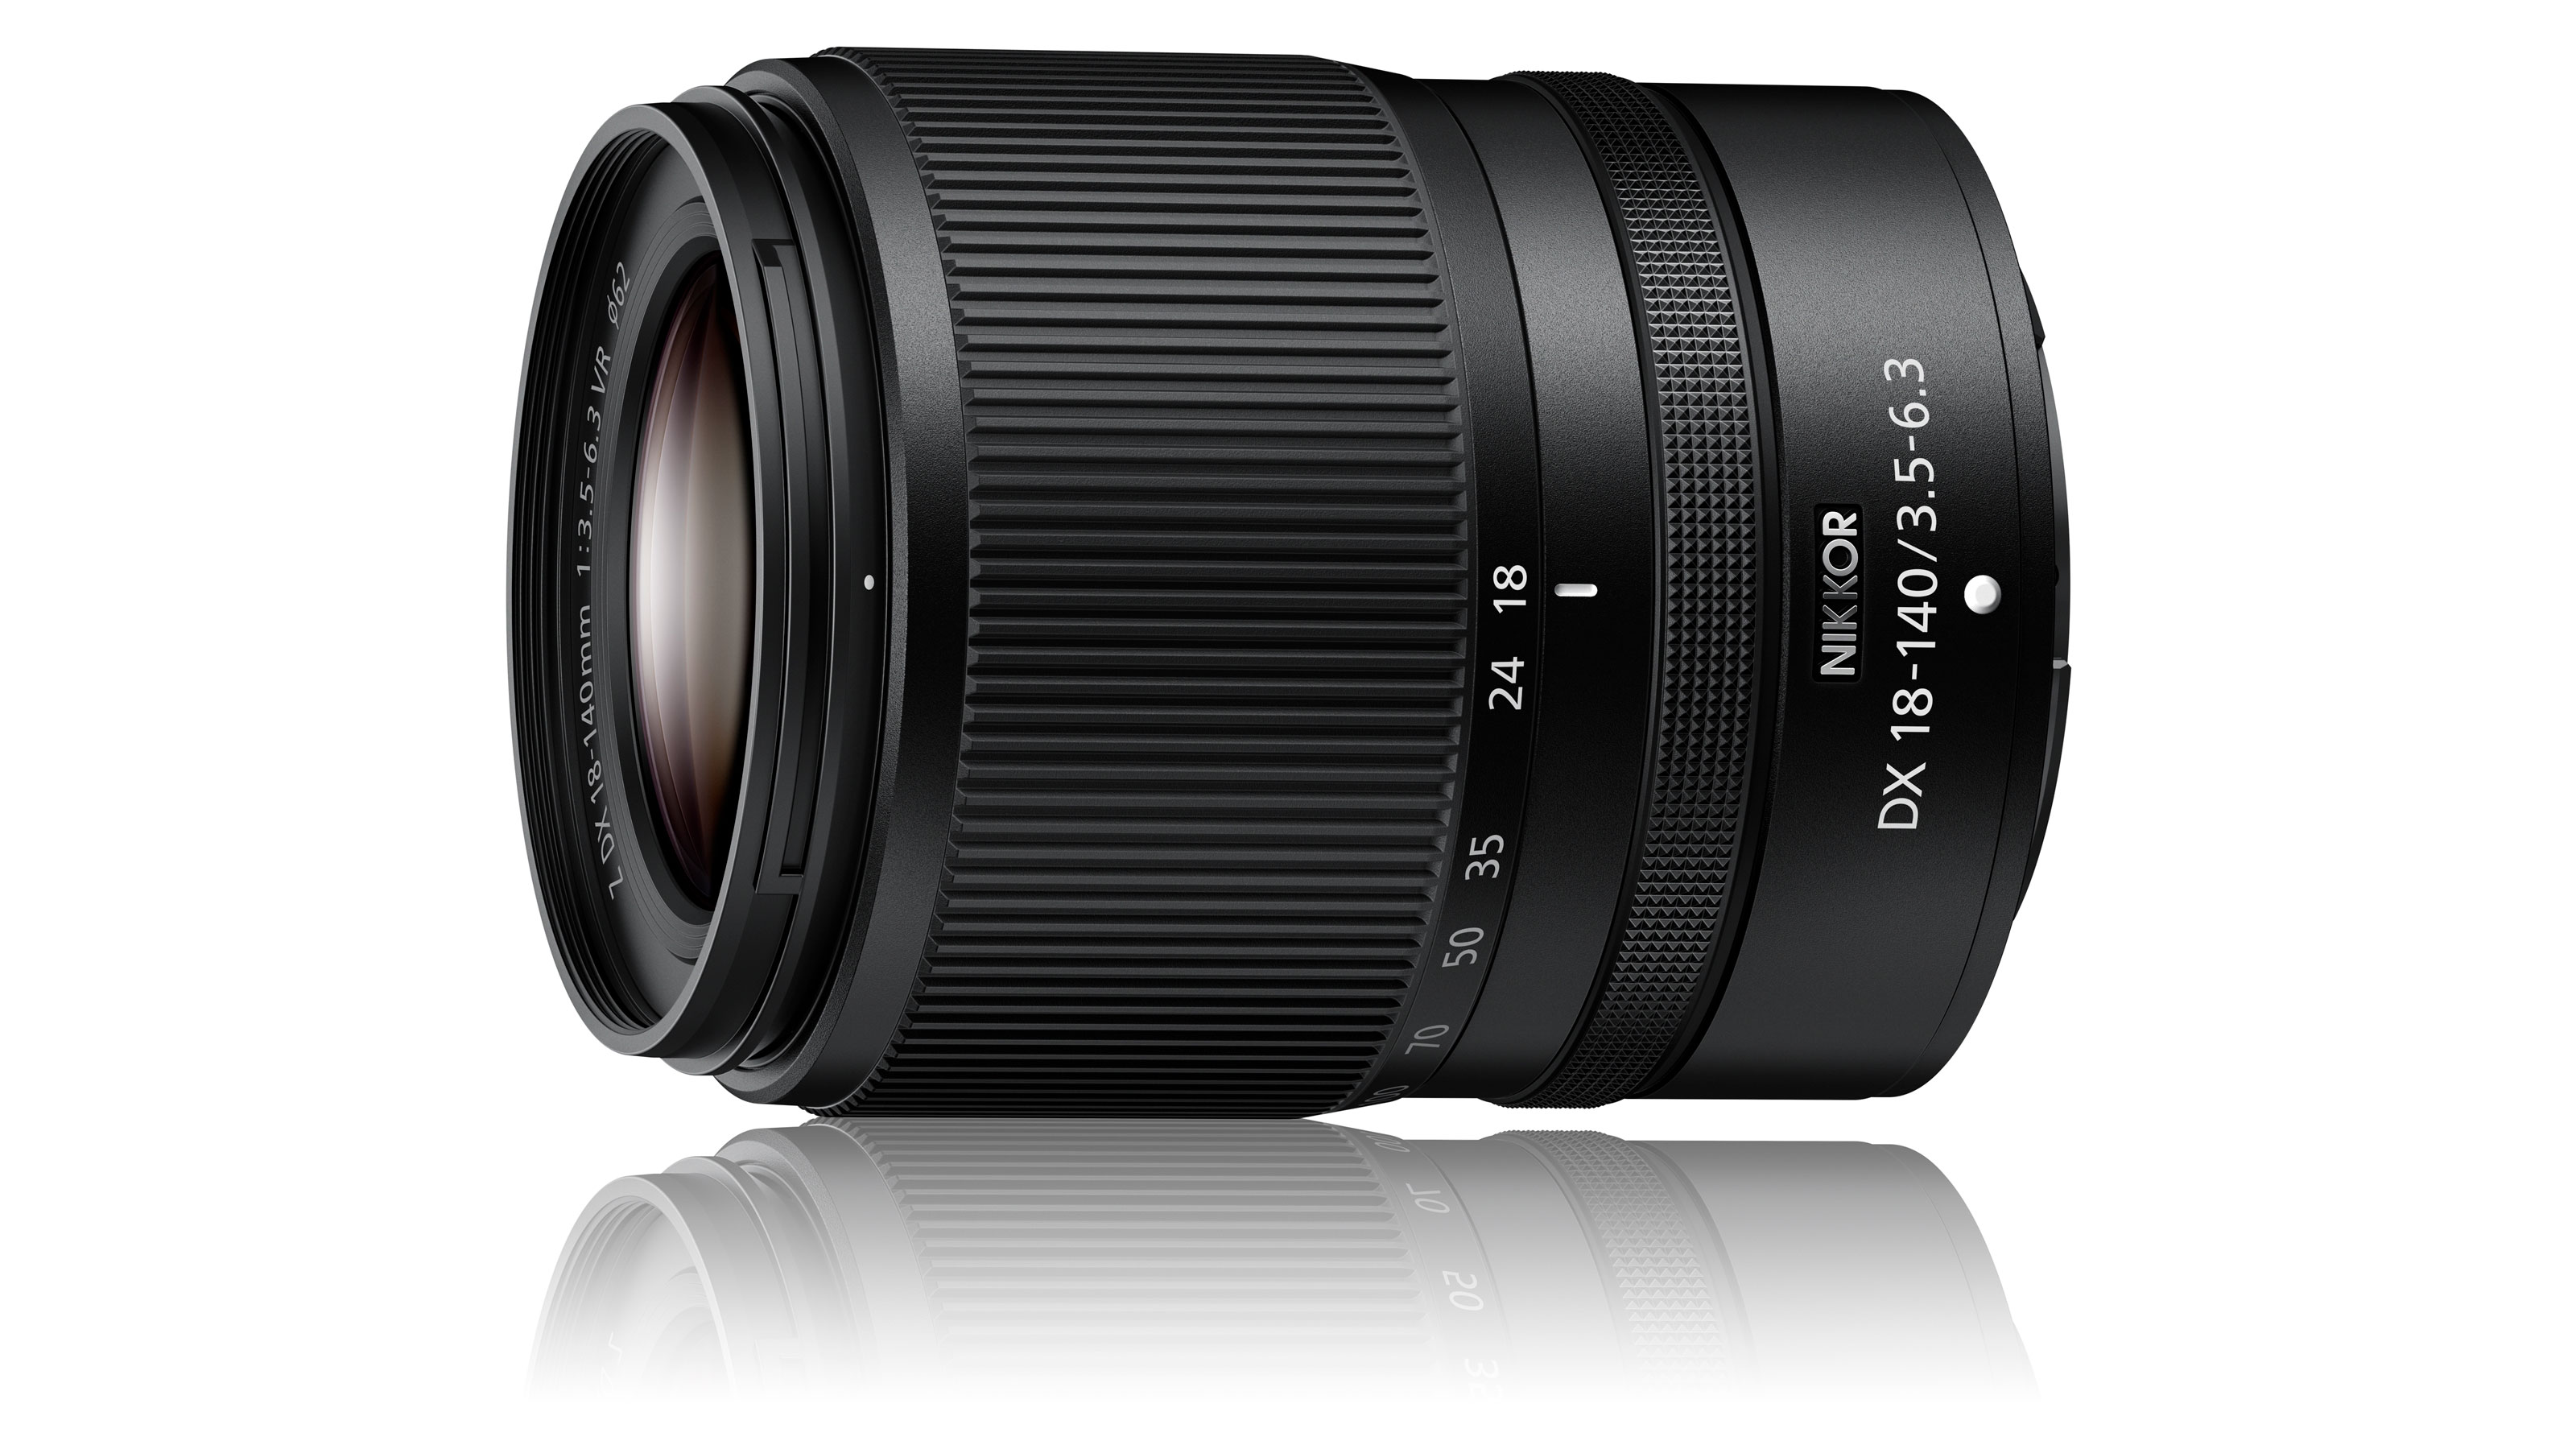 Nikkor Z DX 18-140mm f/3.5-6.3 VR officially released for Nikon